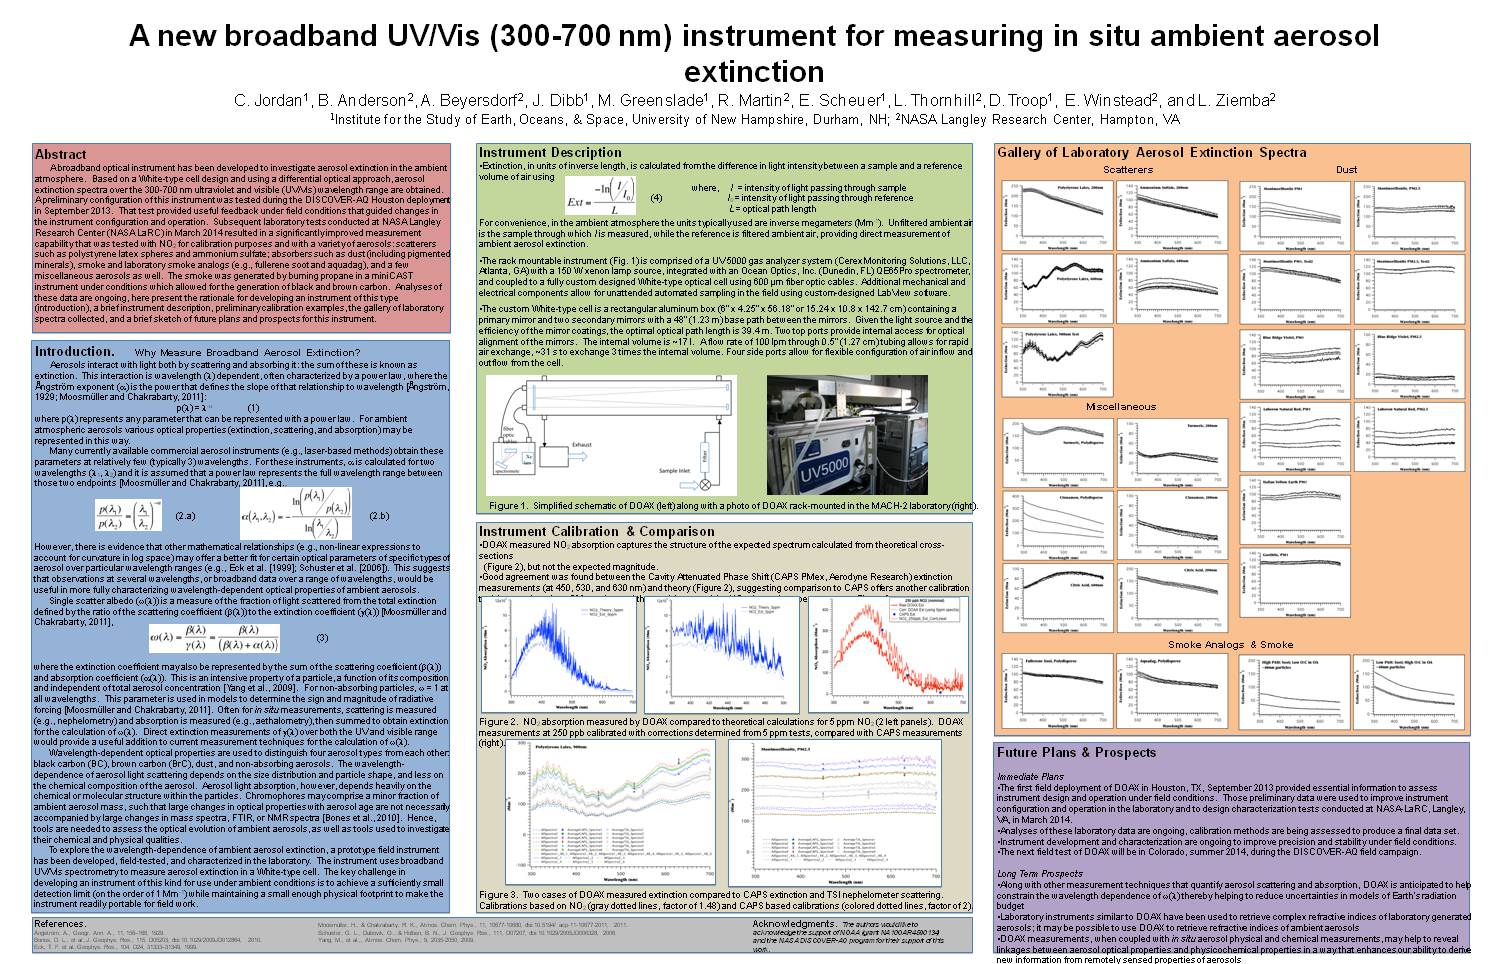 A New Broadband Uv/Vis (300-700 Nm) Instrument For Measuring In Situ Ambient Aerosol Extinction by CEJordan